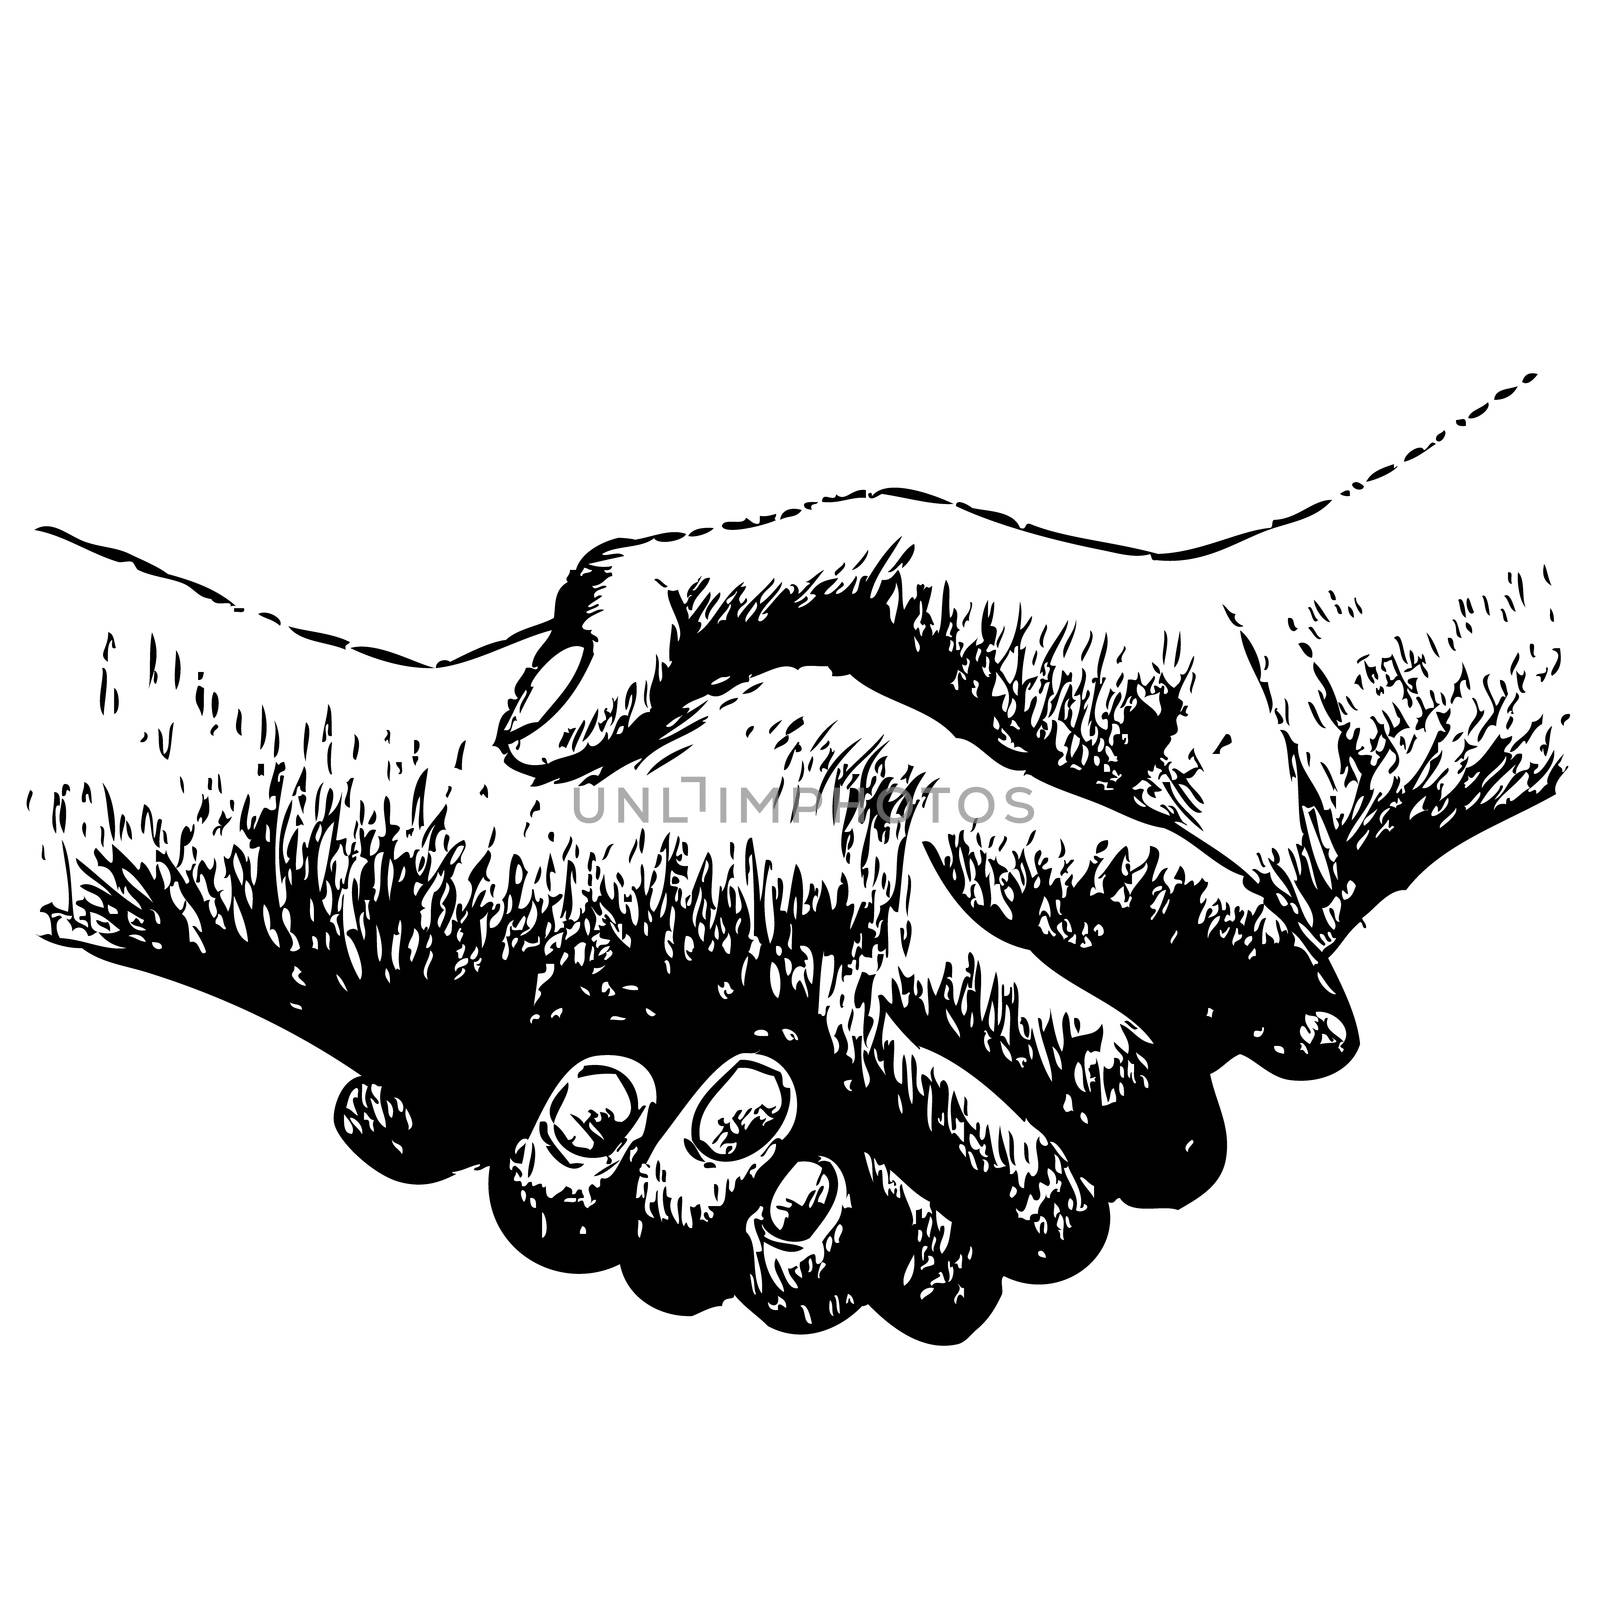 hand drawn illustration of shaking hands